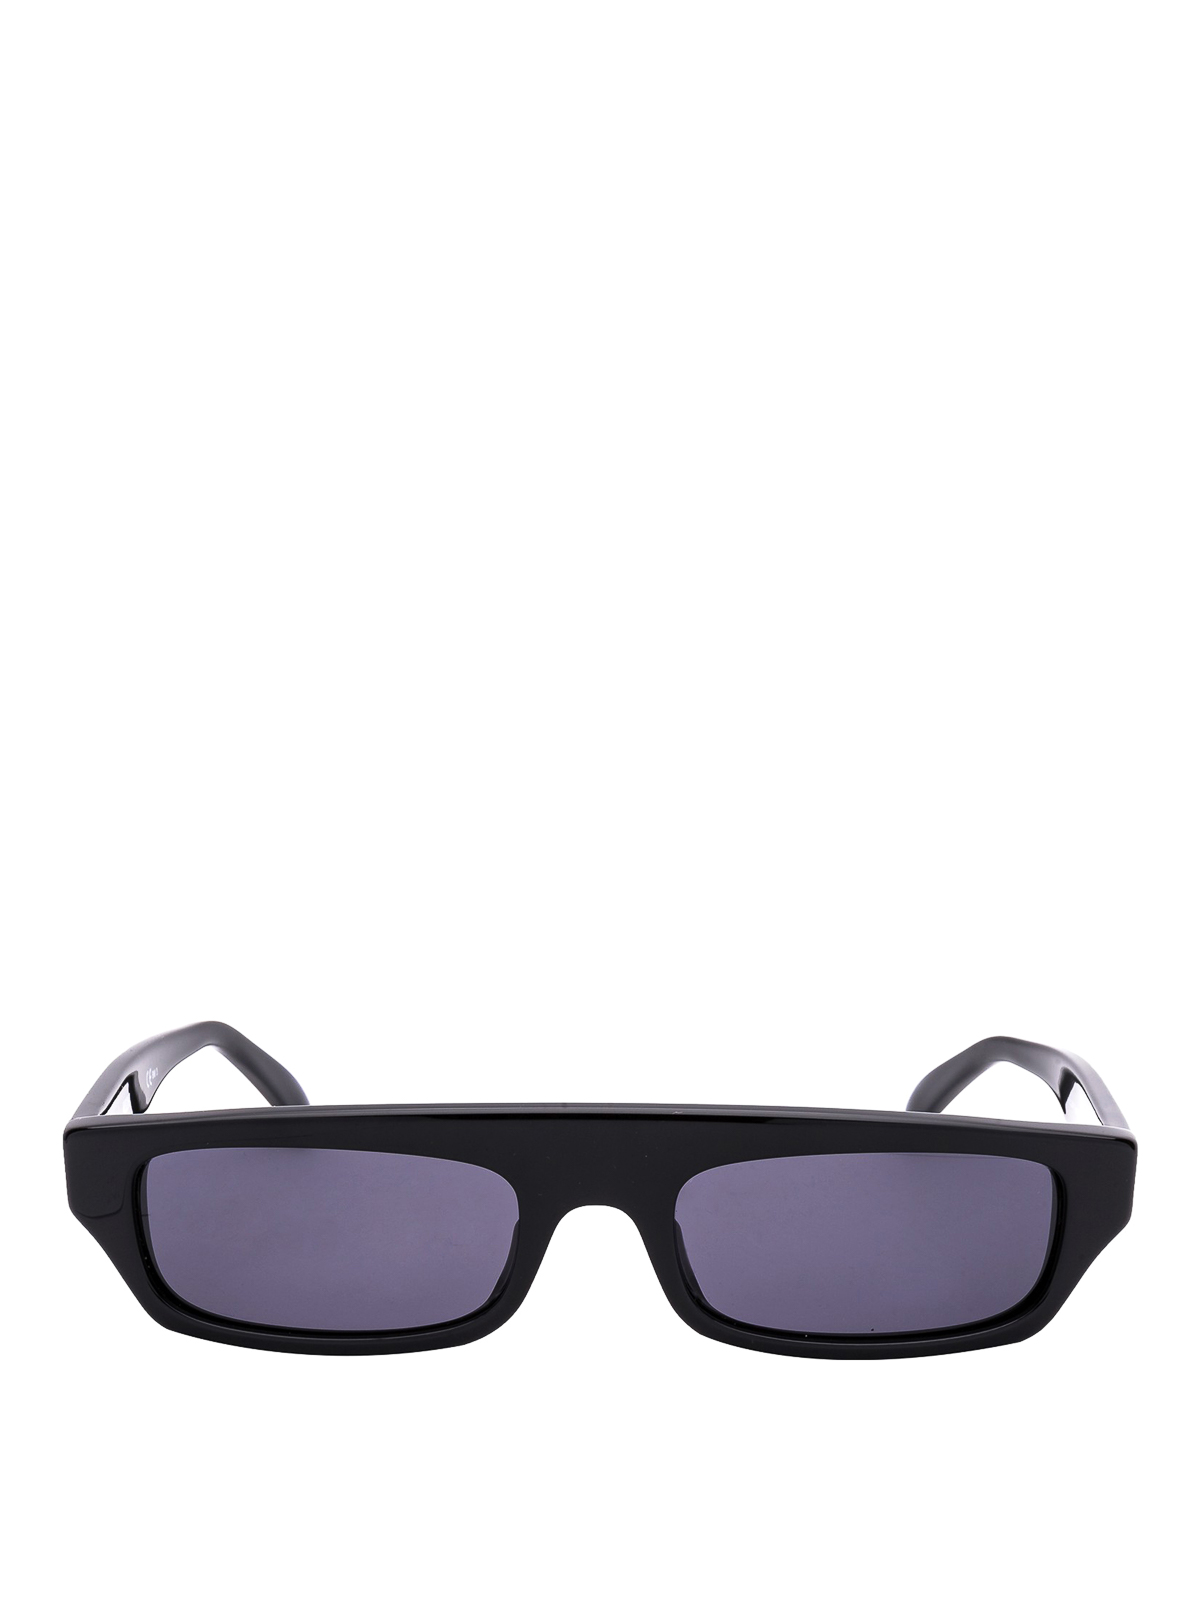 Sunglasses Moschino - Black acetate rectangular sunglasses - MOS047S807IR